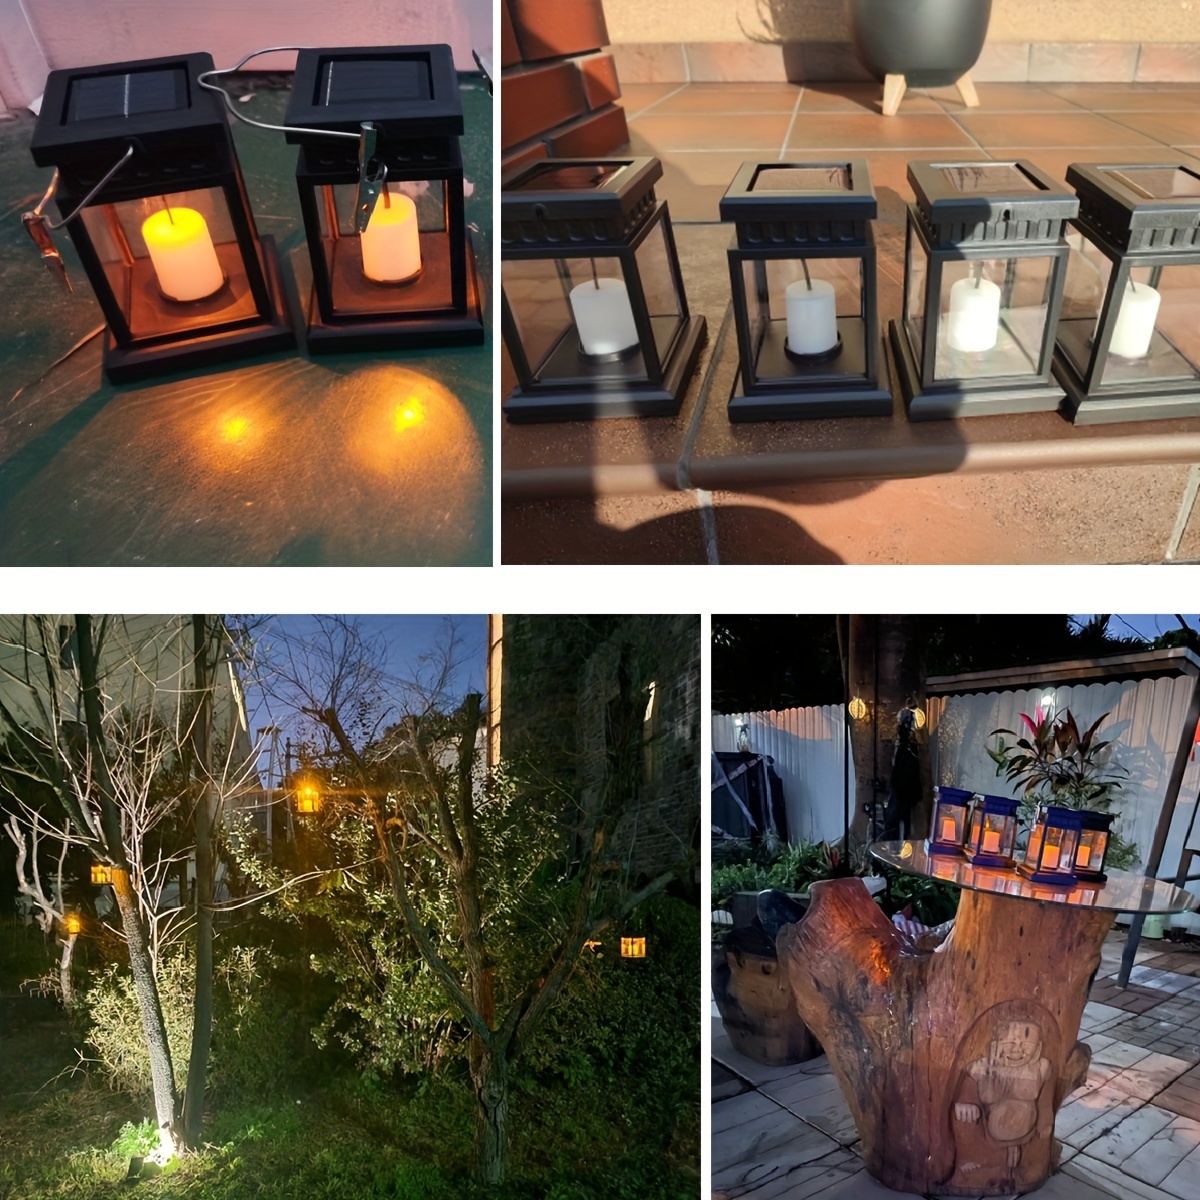 Outdoor Solar Lantern Lights, Solar Lamp Candle Lantern